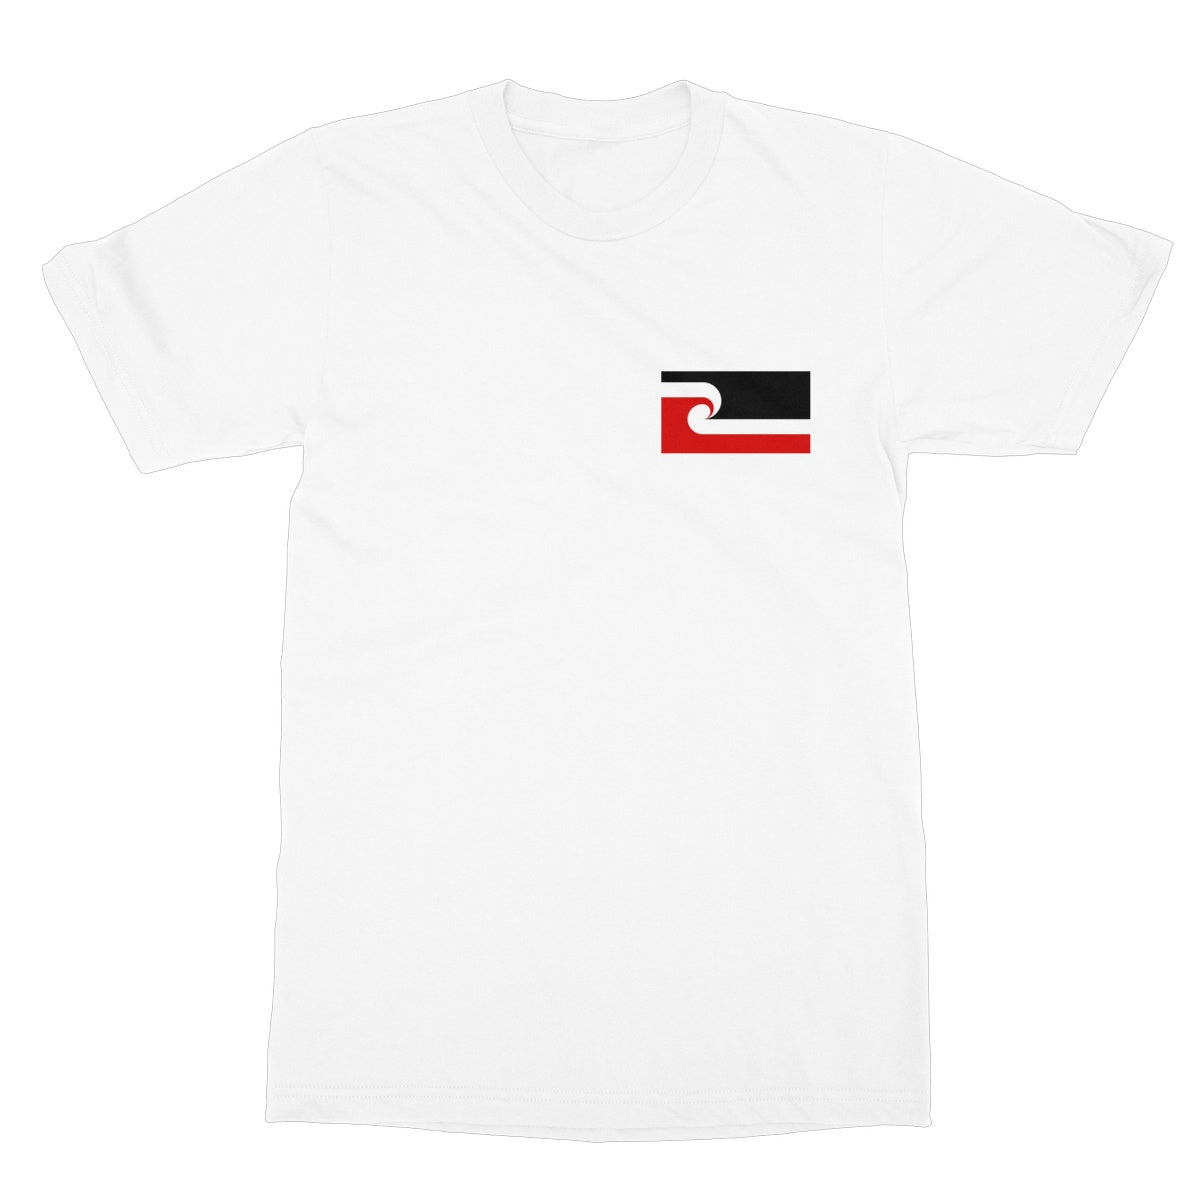 Maori Flag T-Shirt